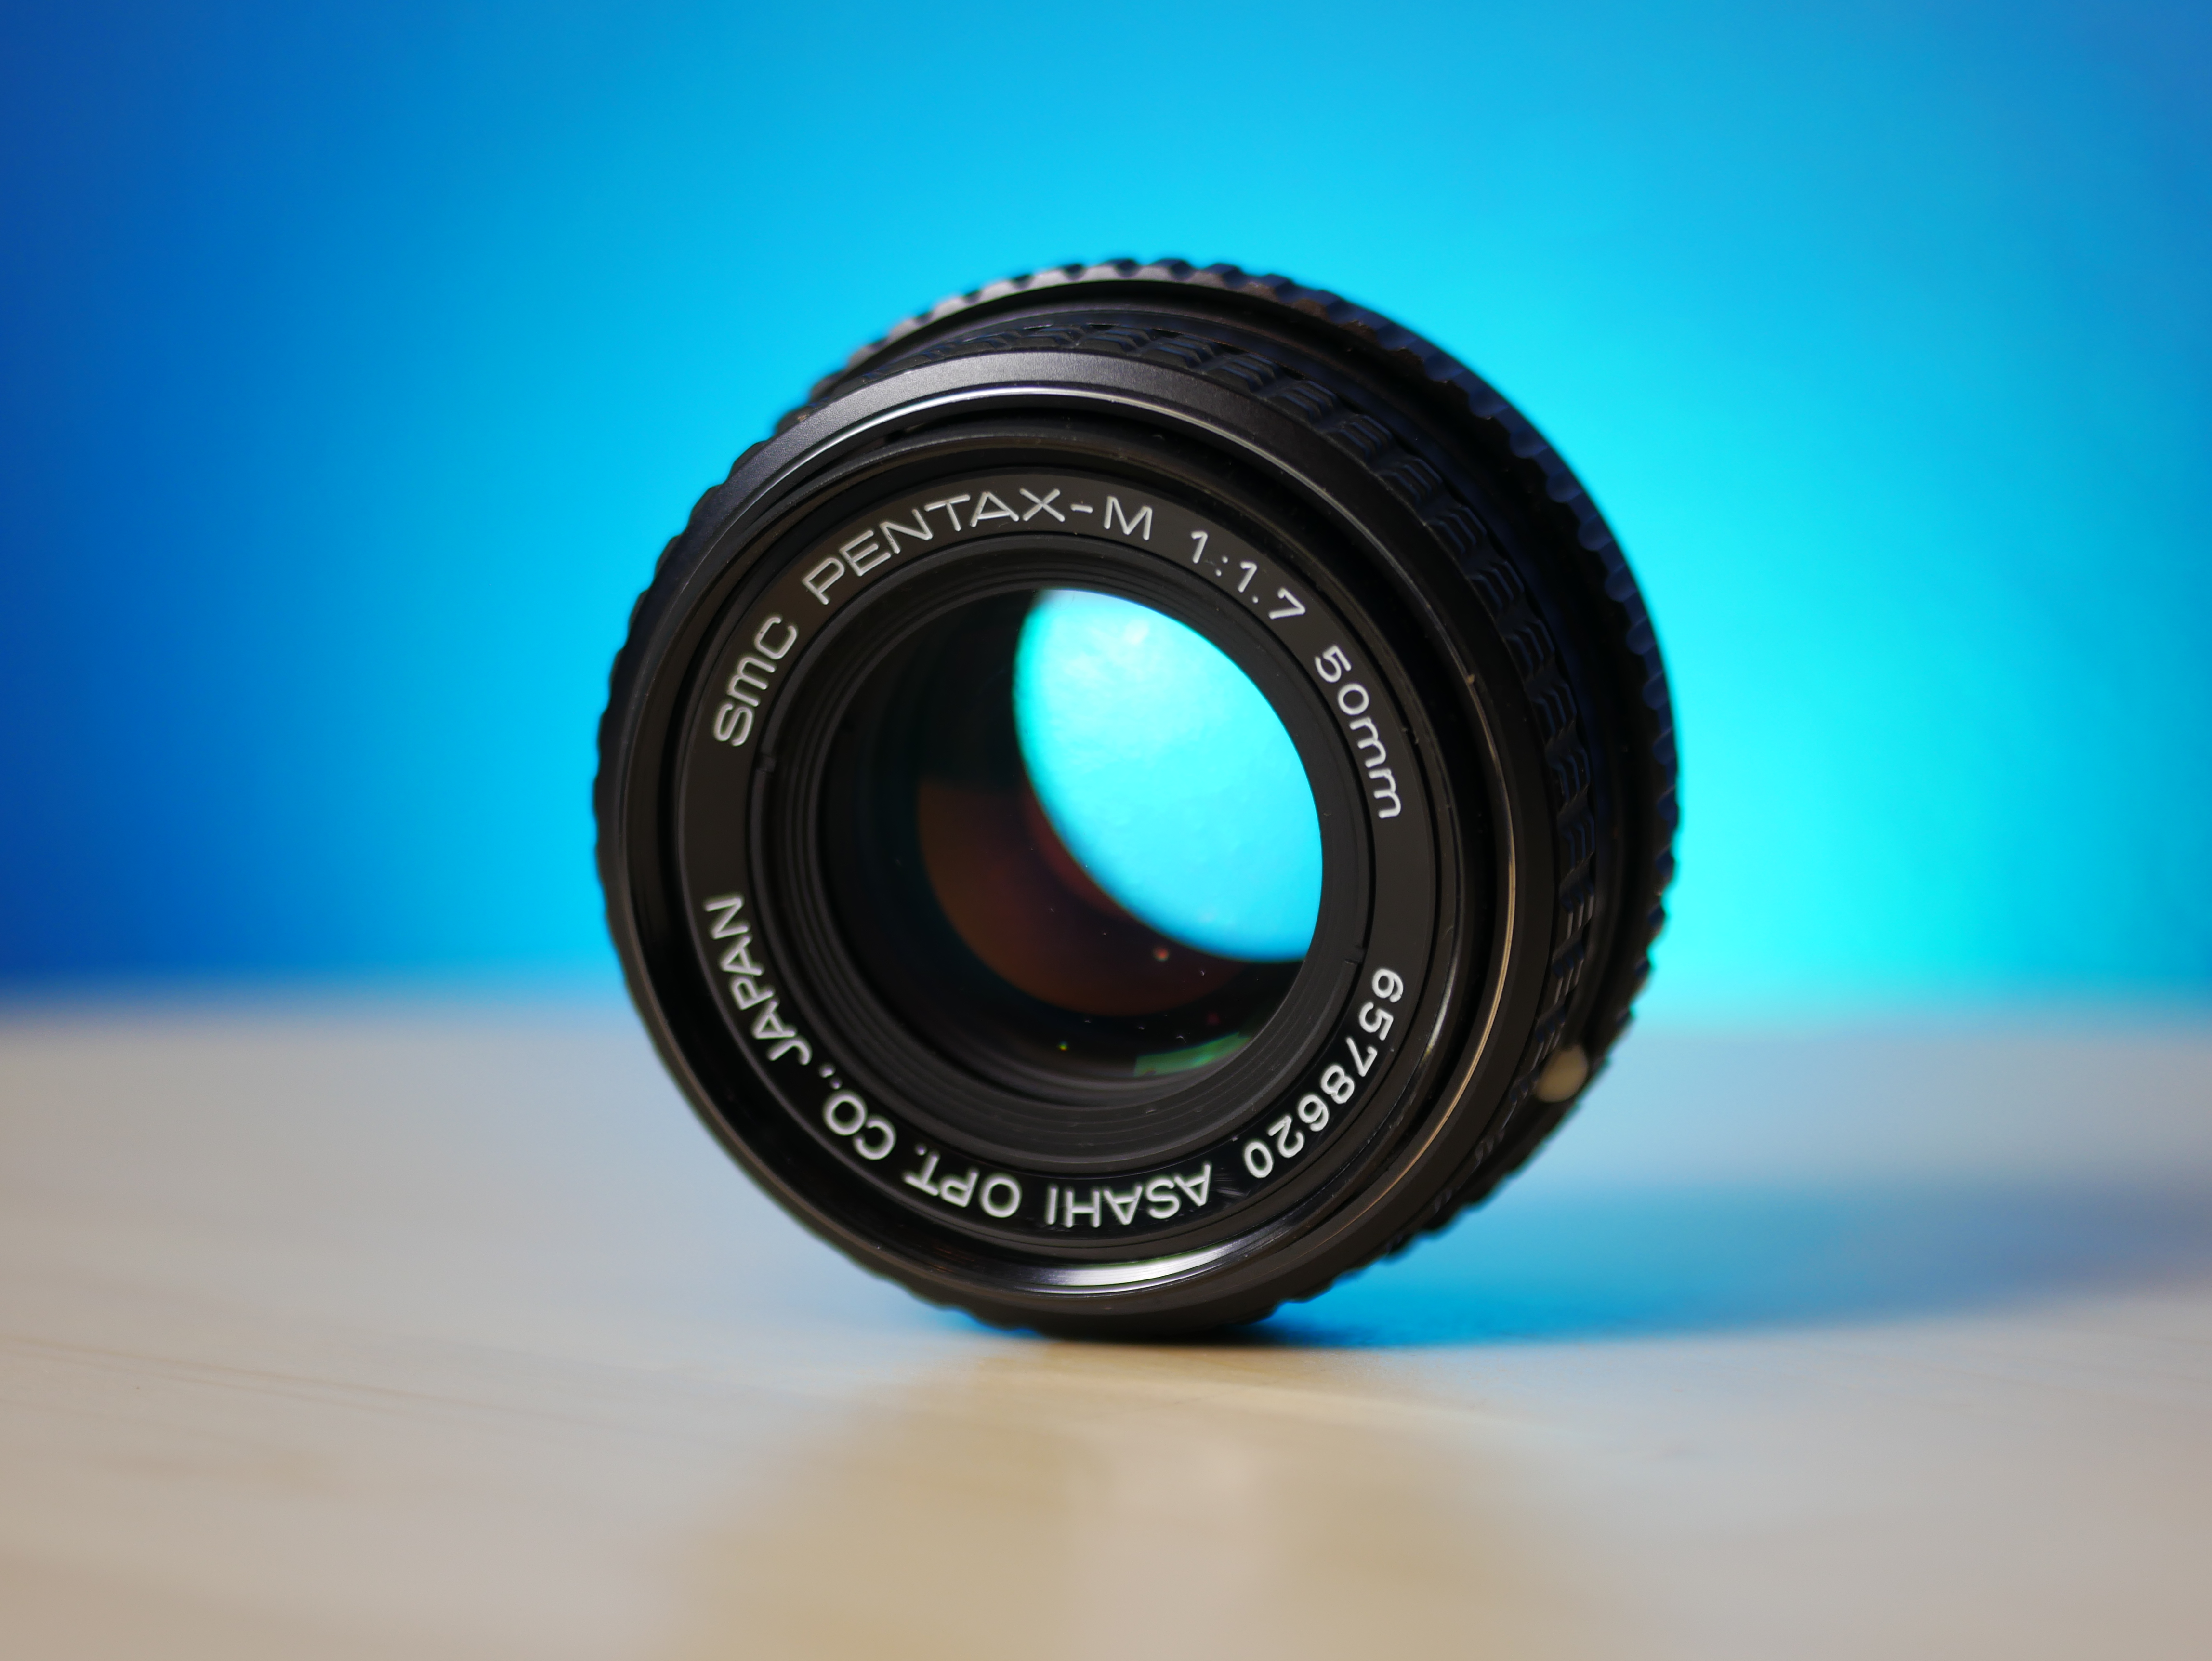 Pentax-M 50mm f1.7 Lens